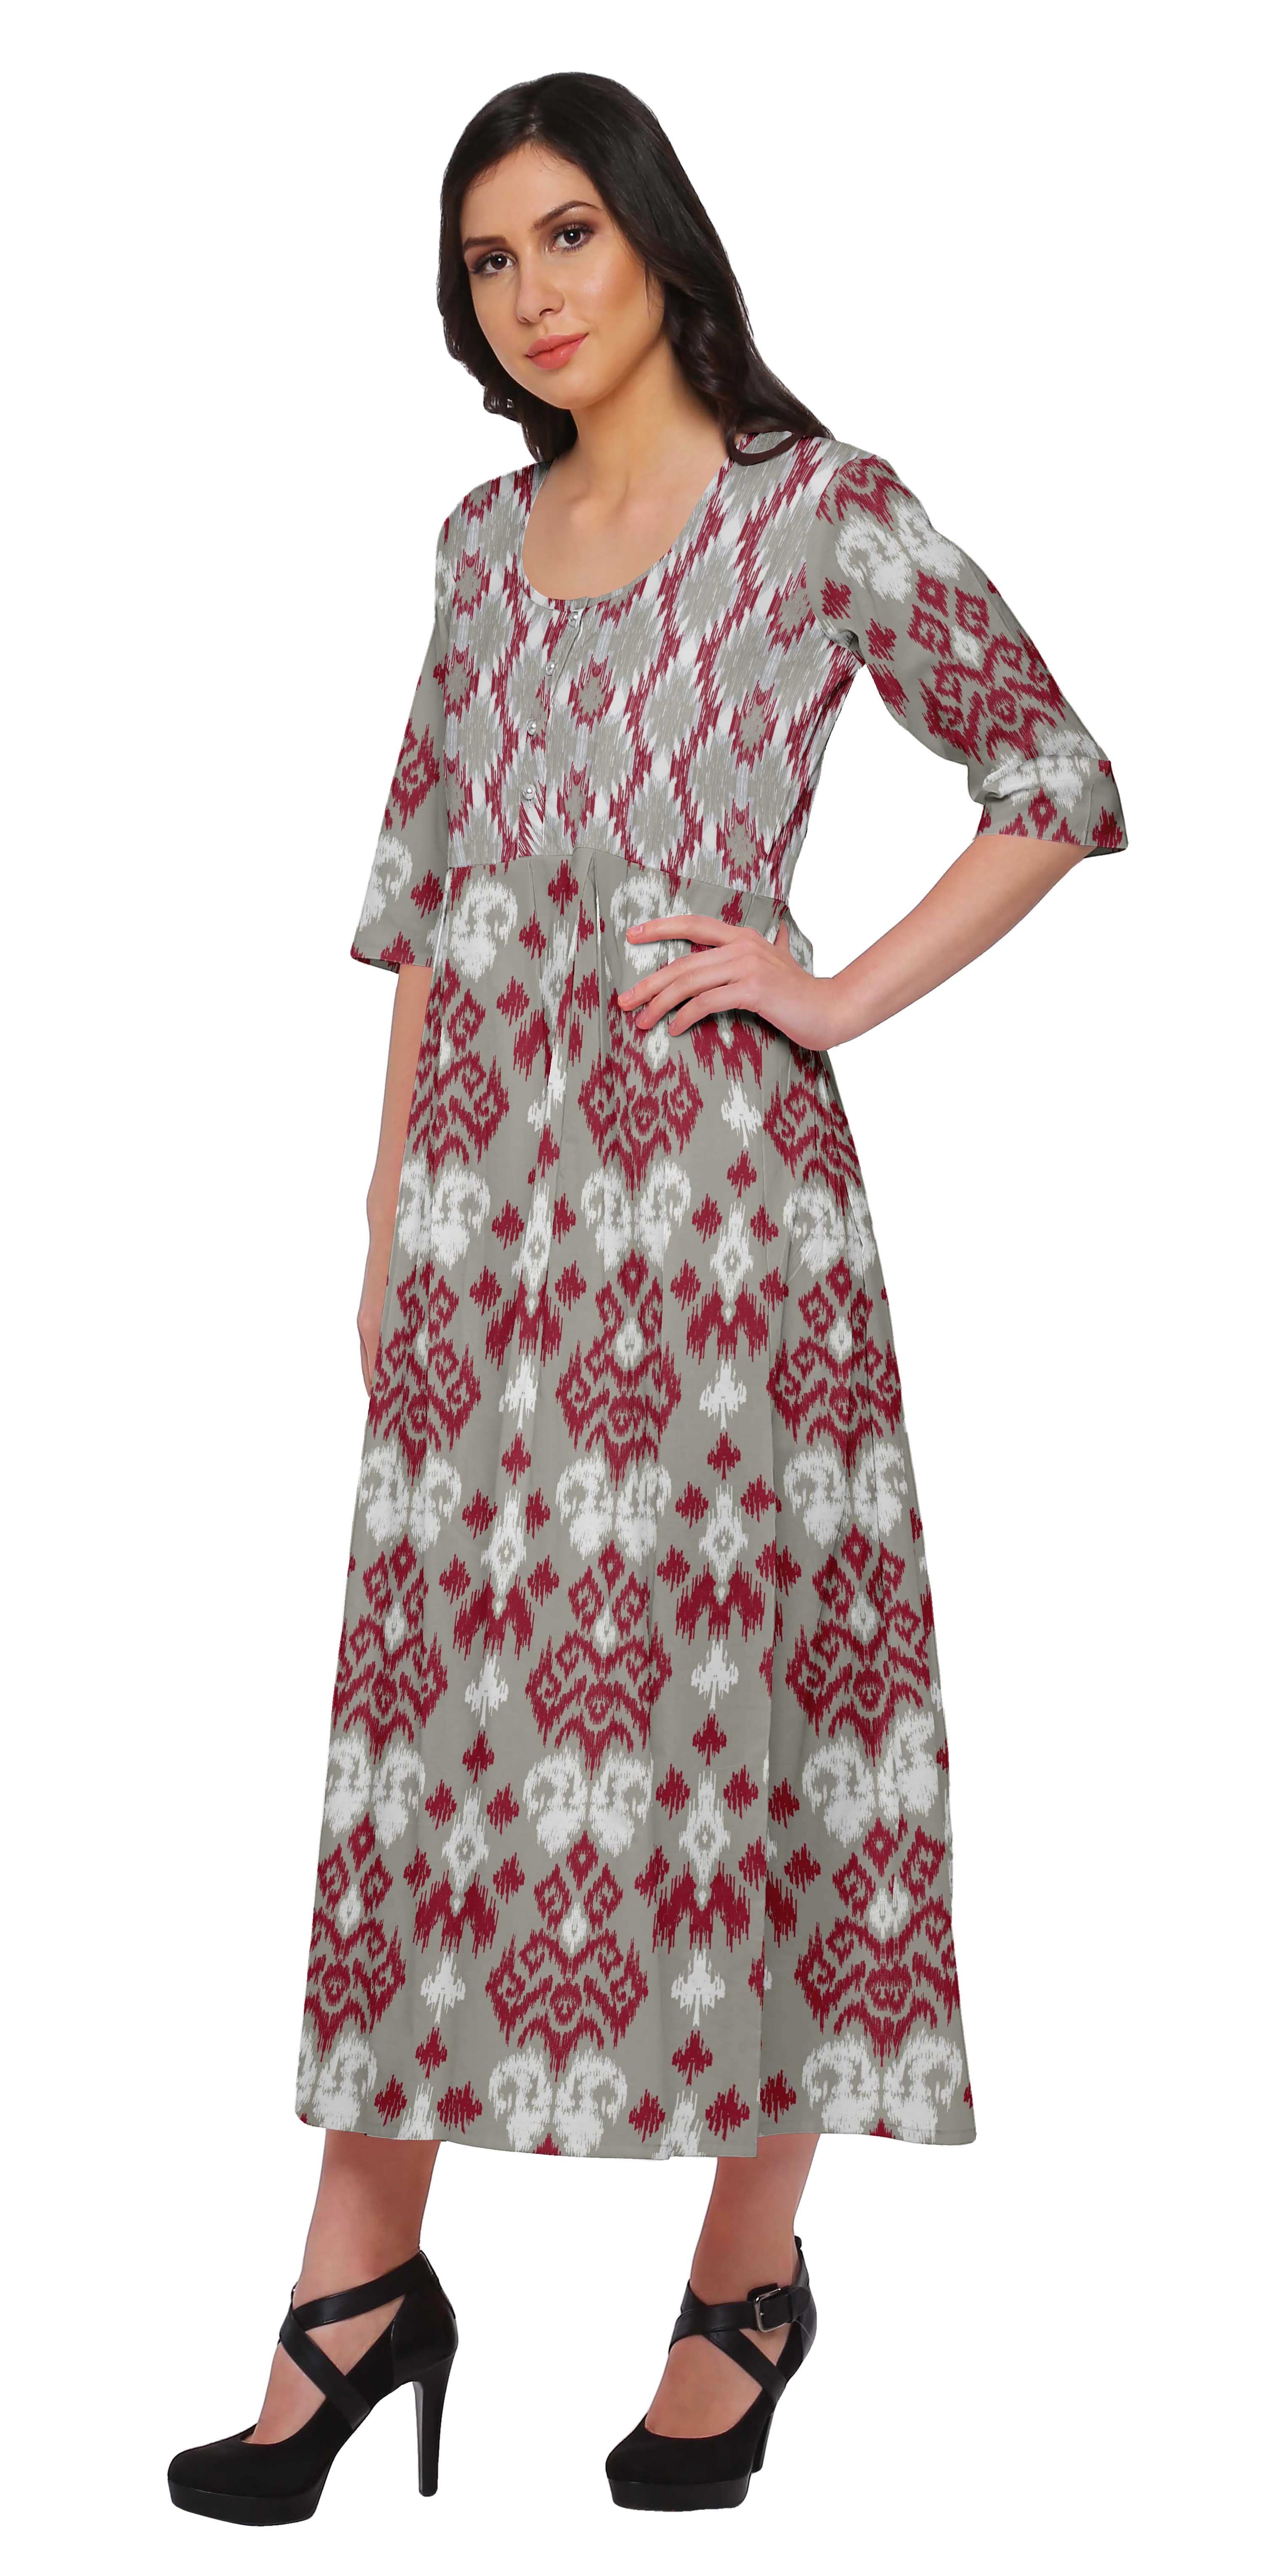 Details about   Pakistani Indian A-Line Dress Cotton Printed Kurta Green & White 3/4 Sleeve